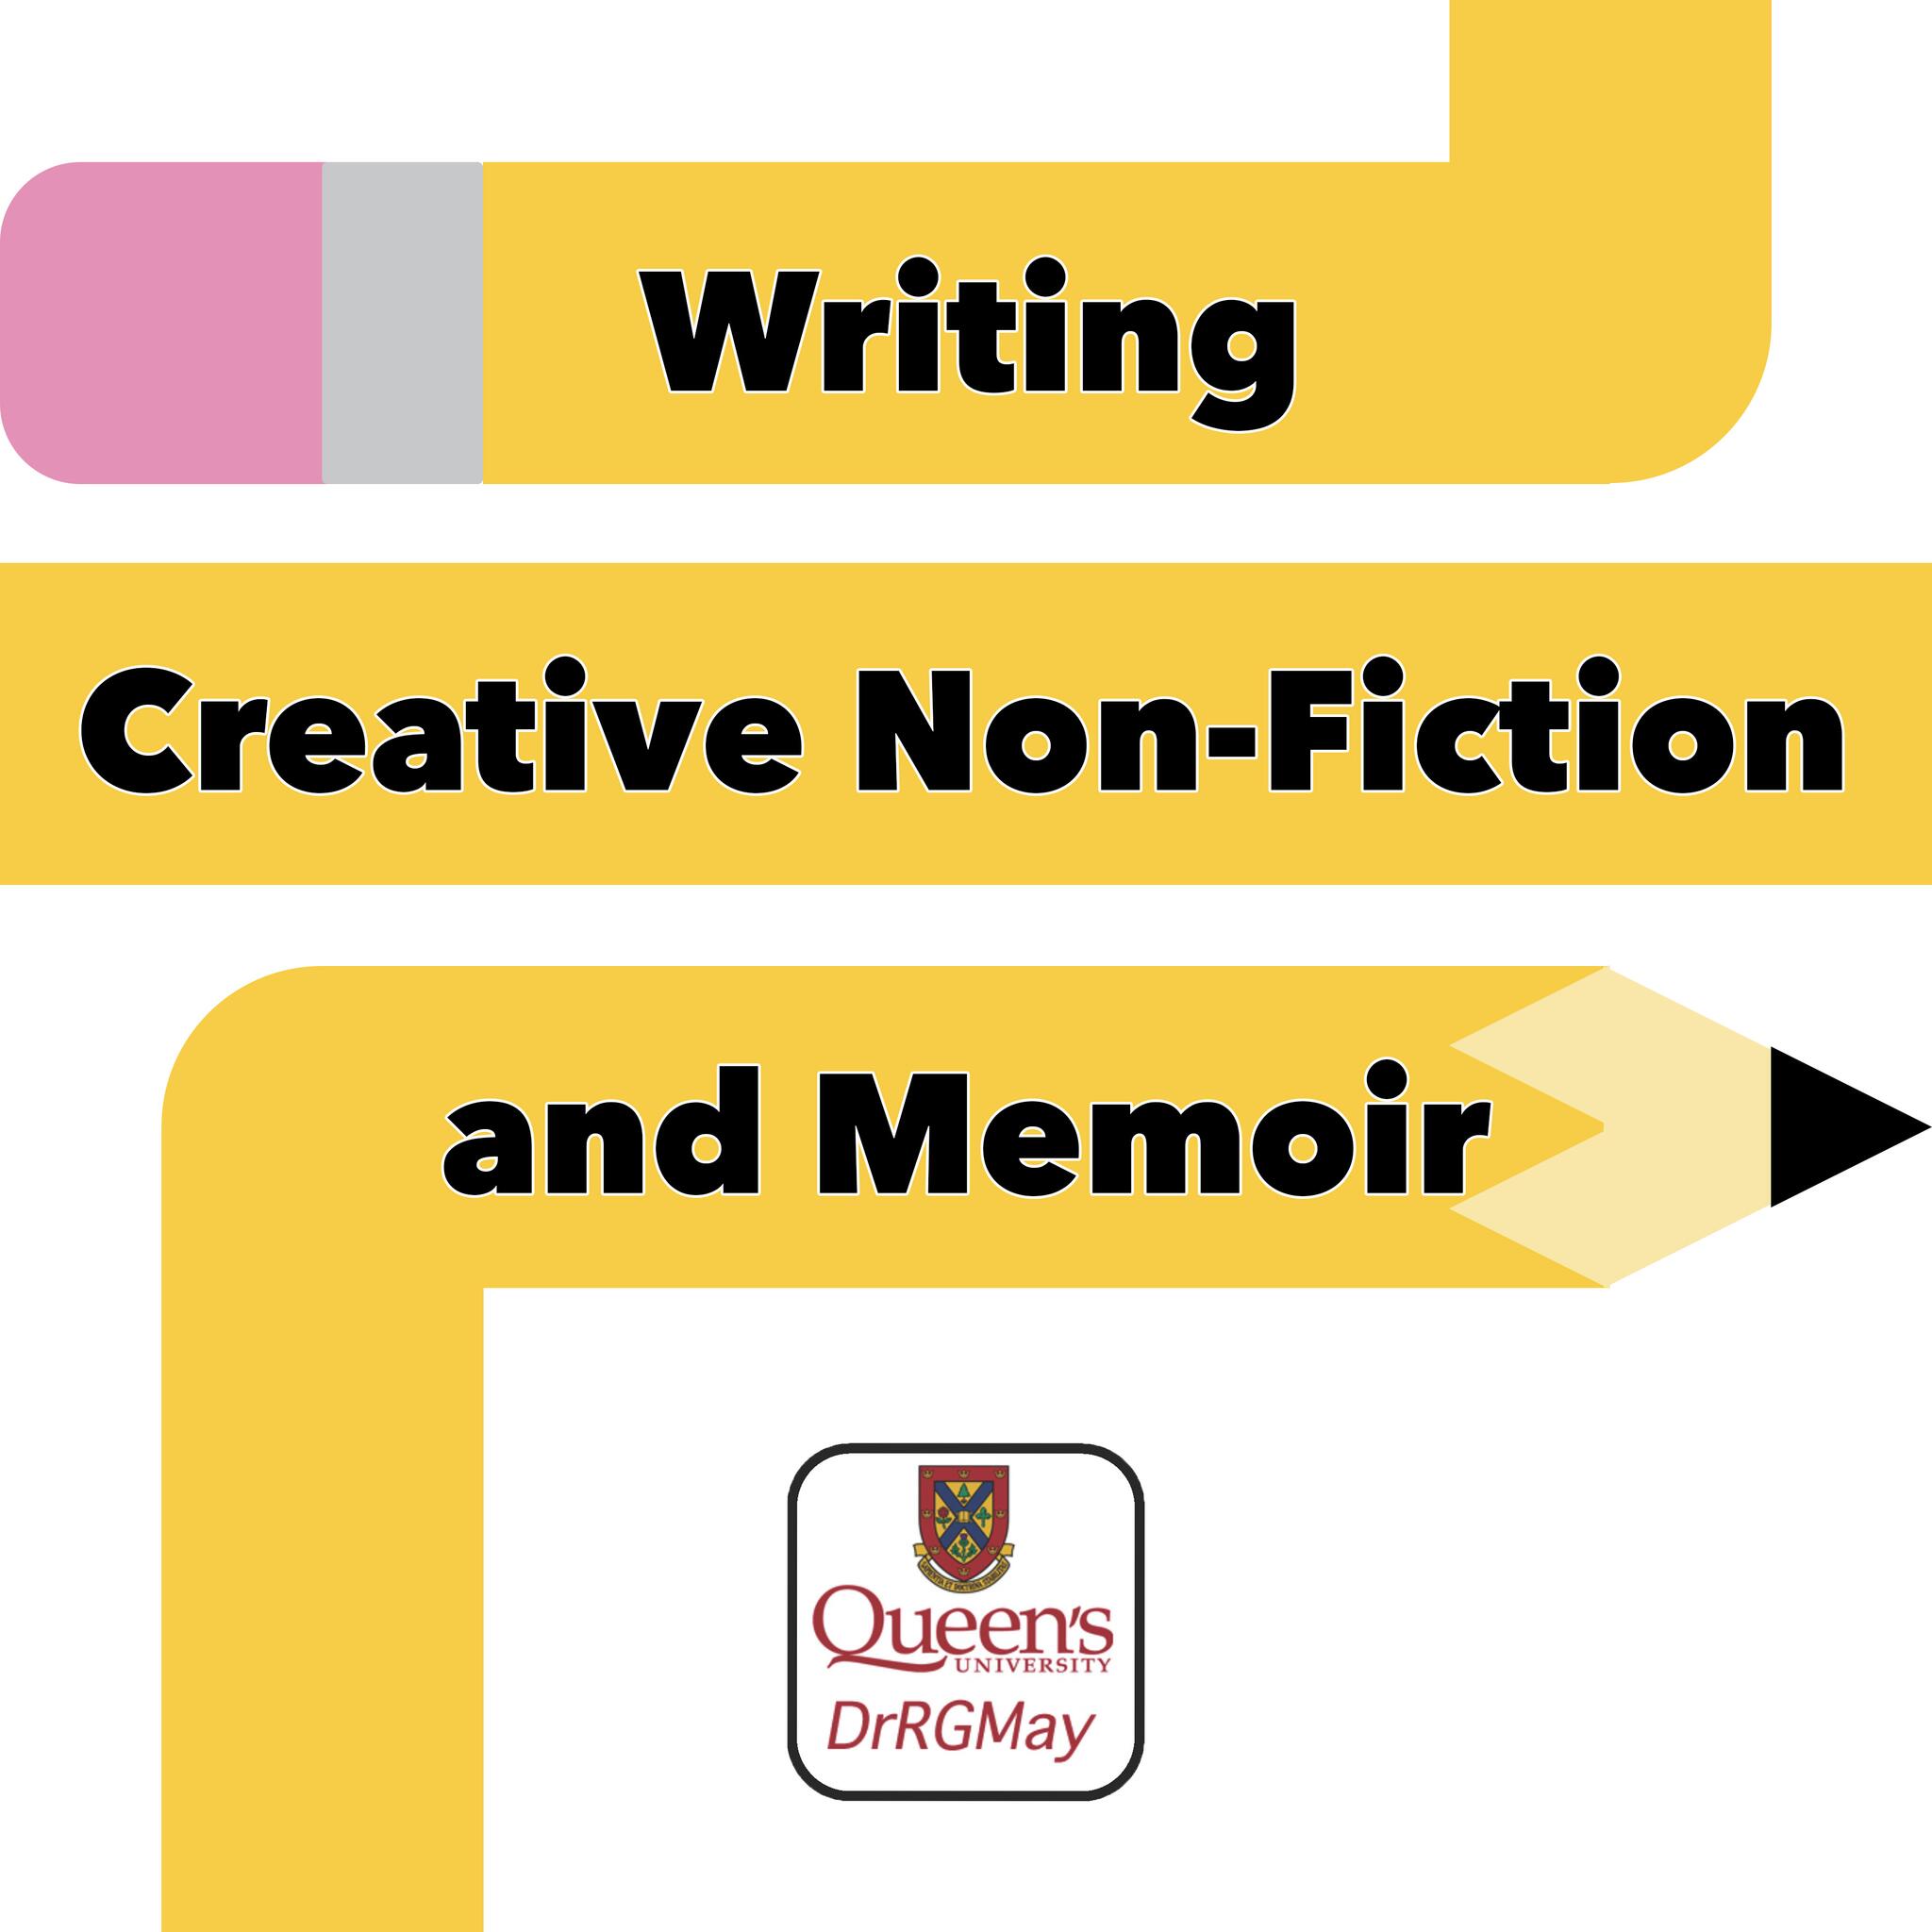 Writing Creative Non-Fiction and Memoir